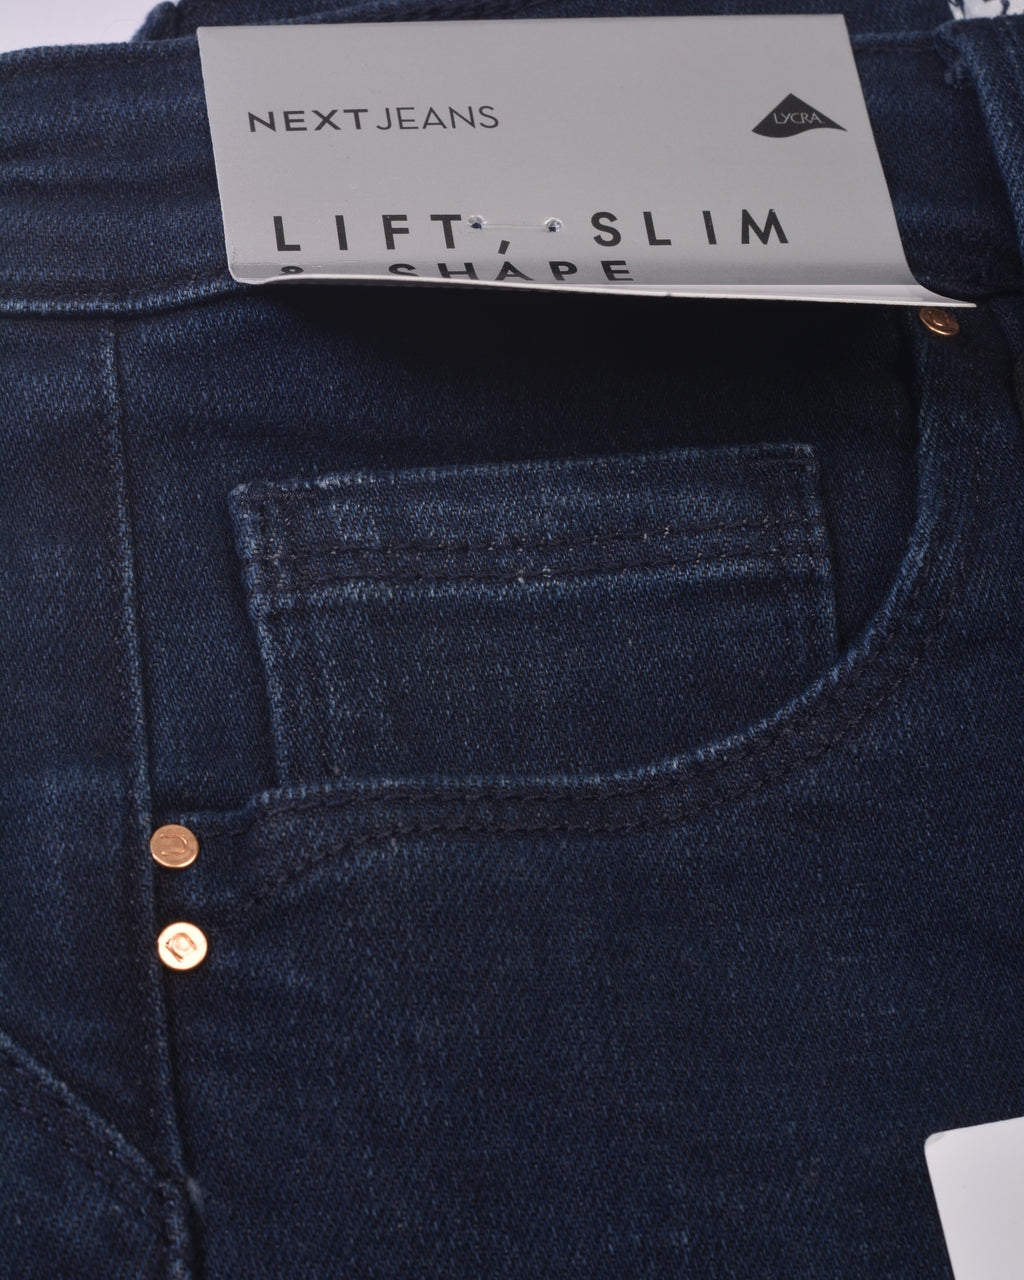 Next jeans Lift,Slim & Shape Raw